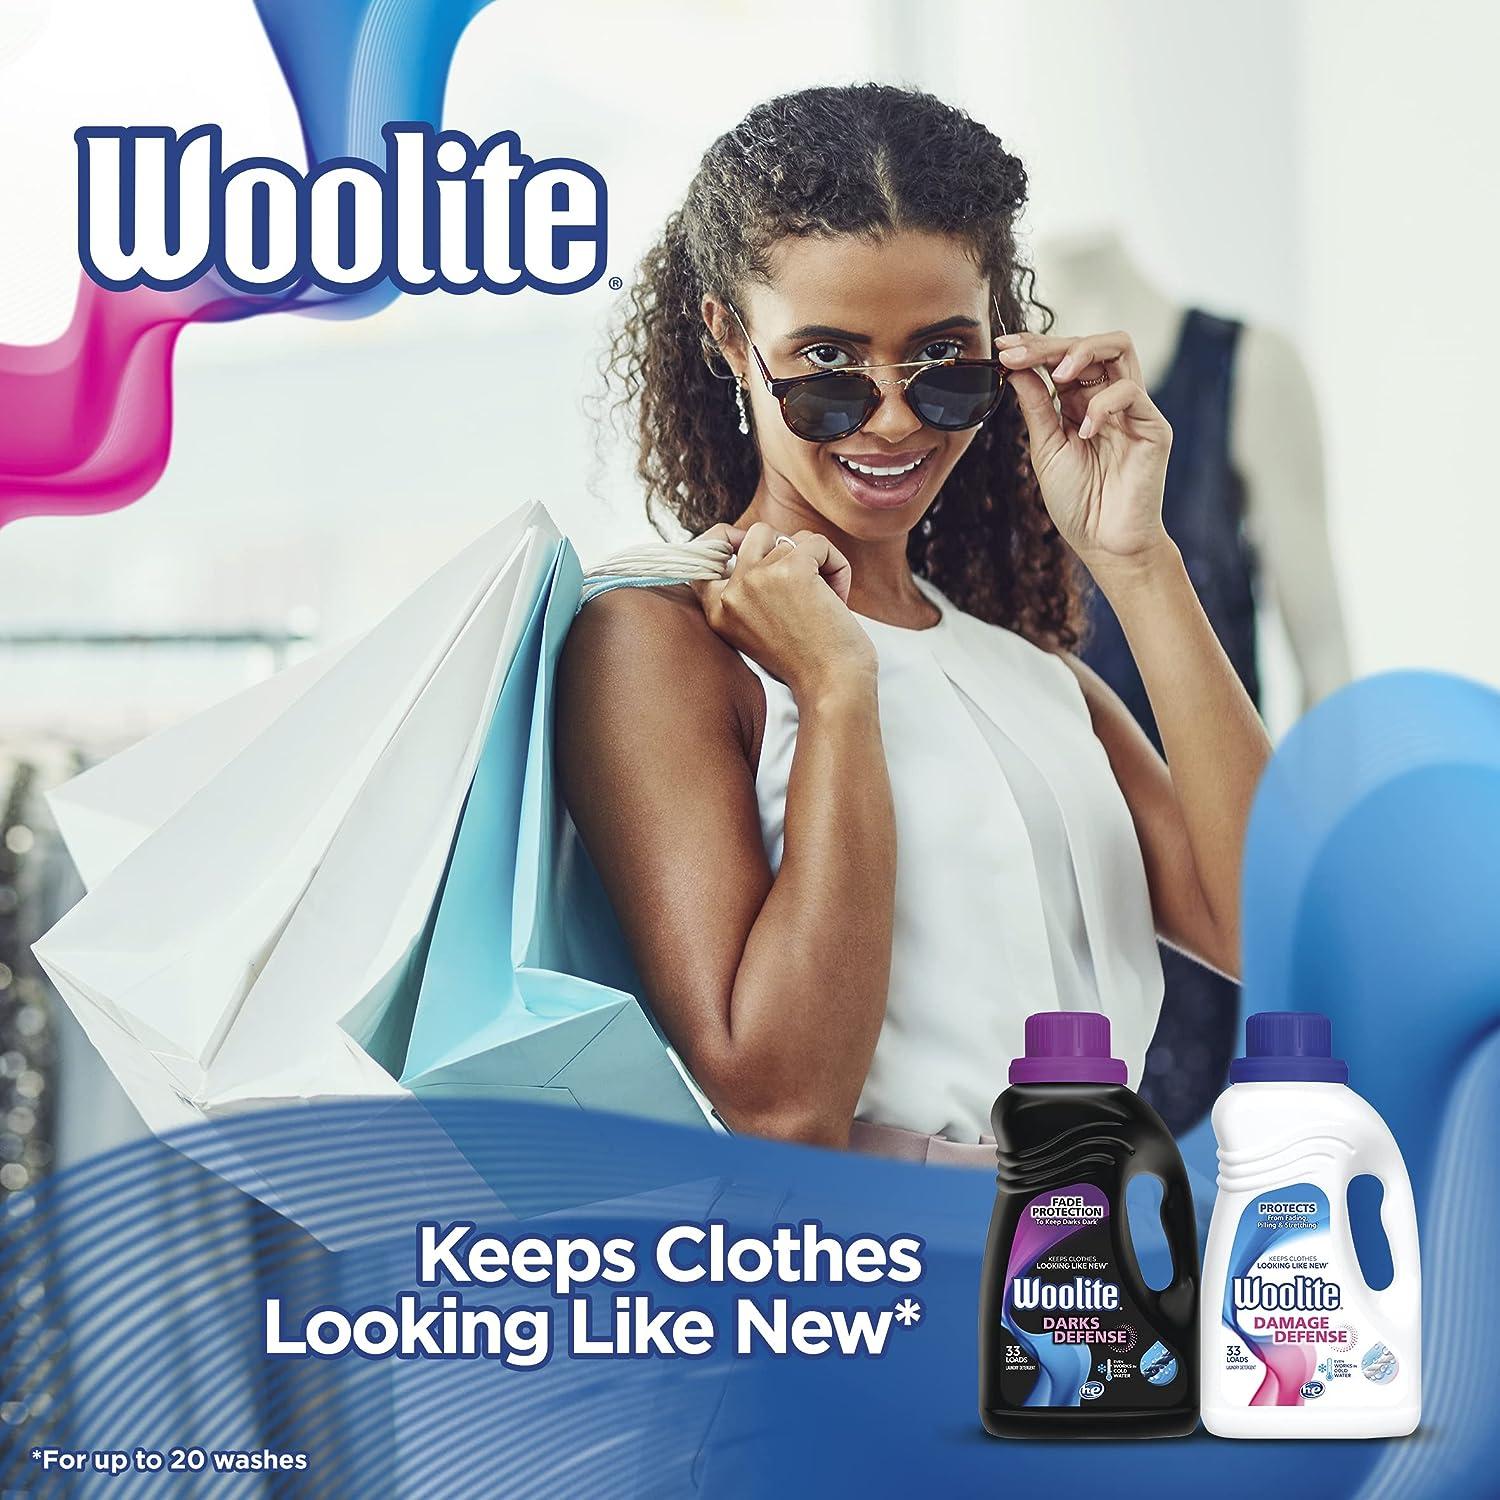 Woolite Damage Defense Laundry Detergent, 33 Loads, 50 Fl Oz, Regular & HE  Washers, Packaging May Vary